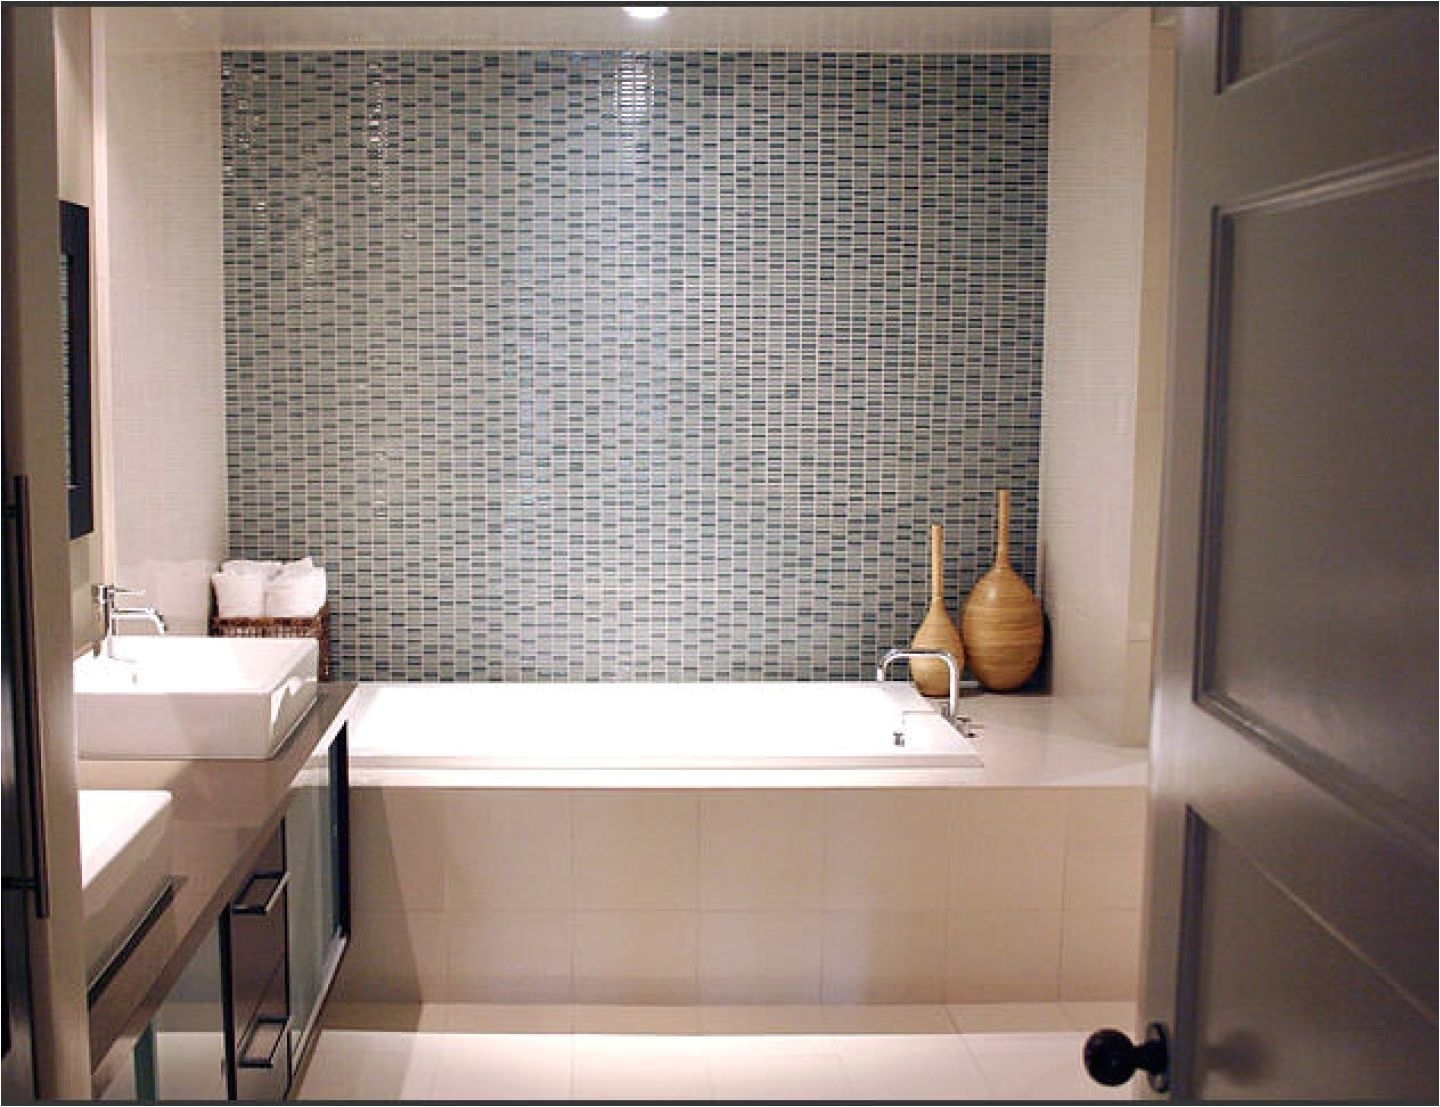 contemporary small bathroom designbathroom ideas modern wel e to asian chat online w5glvfbj 14401107